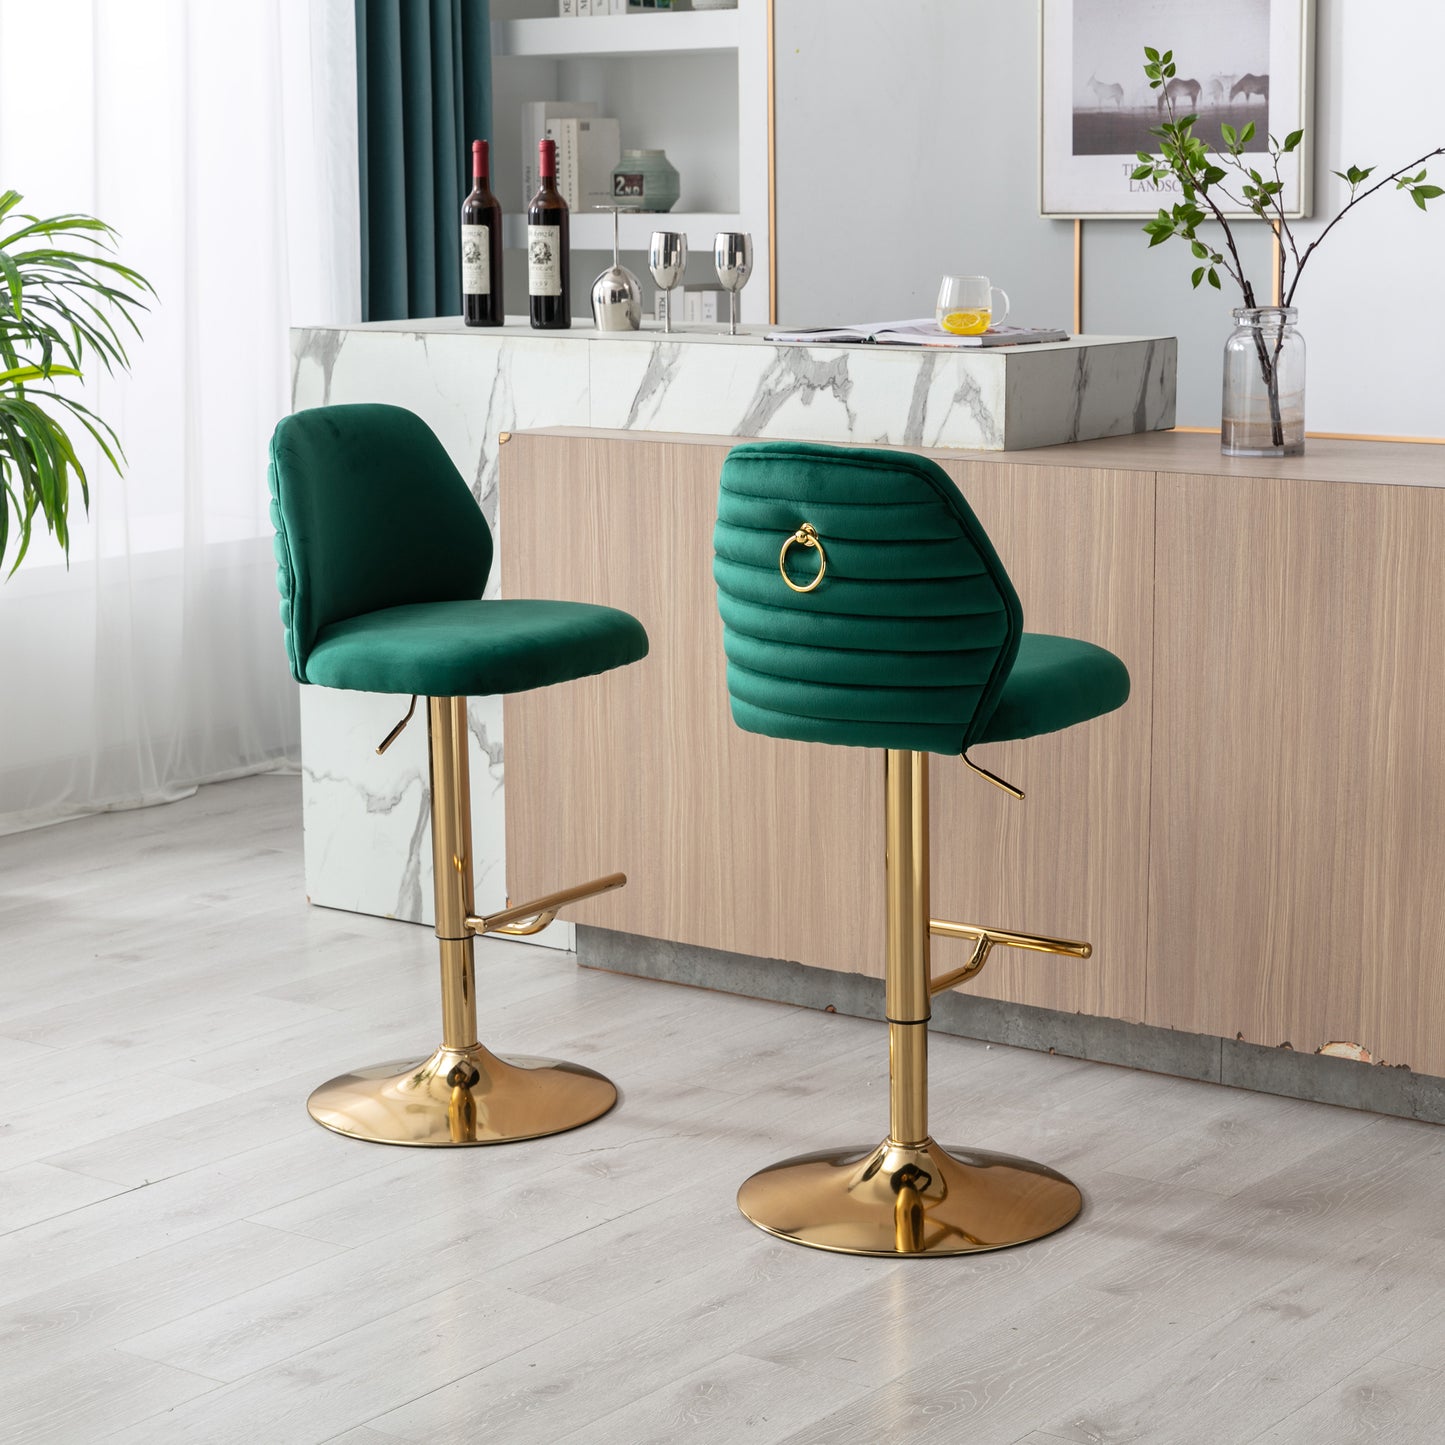 Swivel Bar Stools Chair Set of 2 Modern Adjustable Counter Height Bar Stools, Velvet Upholstered Stool with Tufted High Back & Ring Pull for Kitchen , Chrome Golden Base, Green - Enova Luxe Home Store